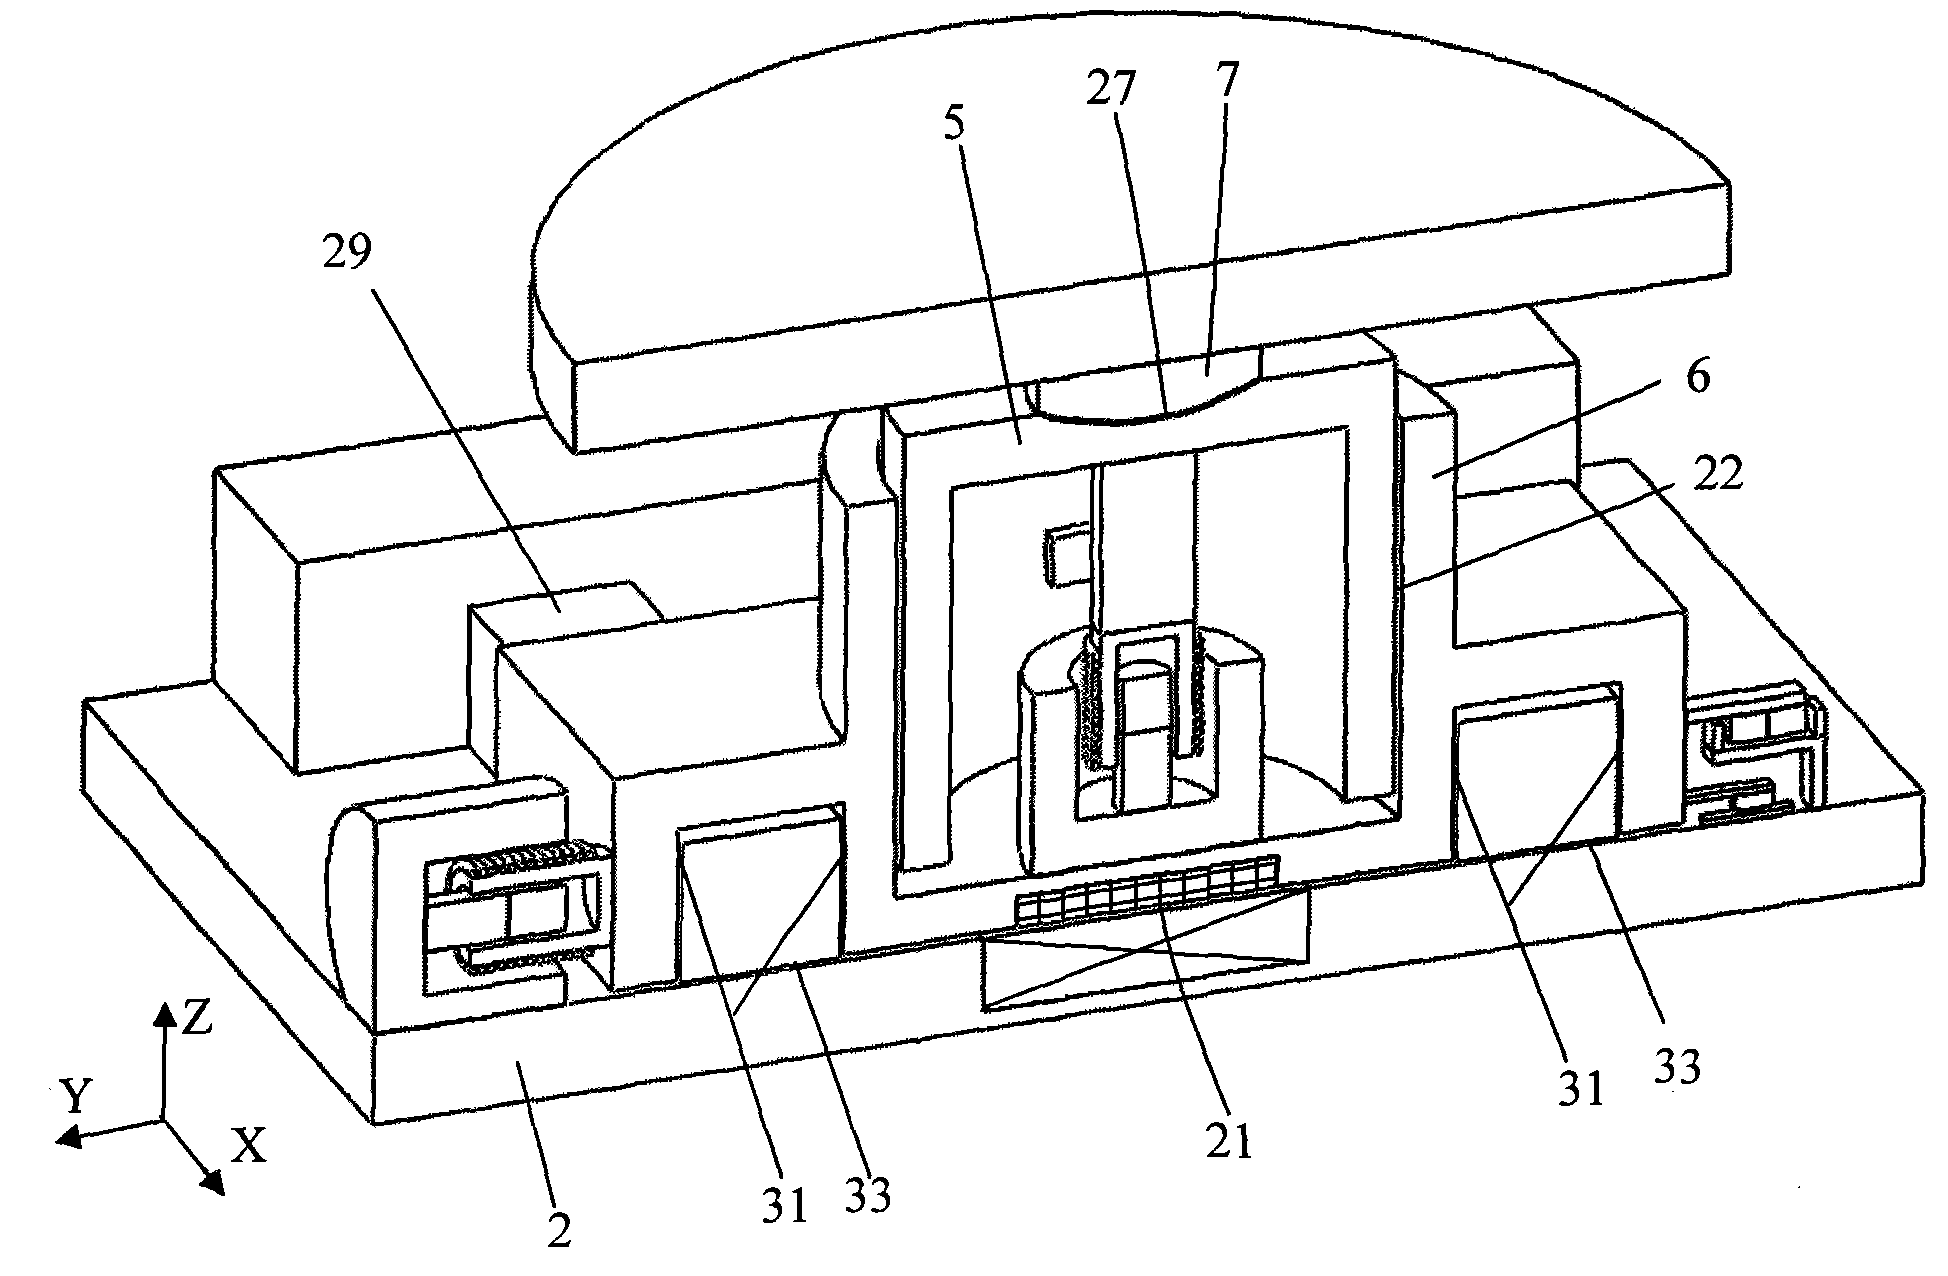 Maglev vibration isolator with coplanar air bearing orthogonal decoupling and air bearing angular decoupling